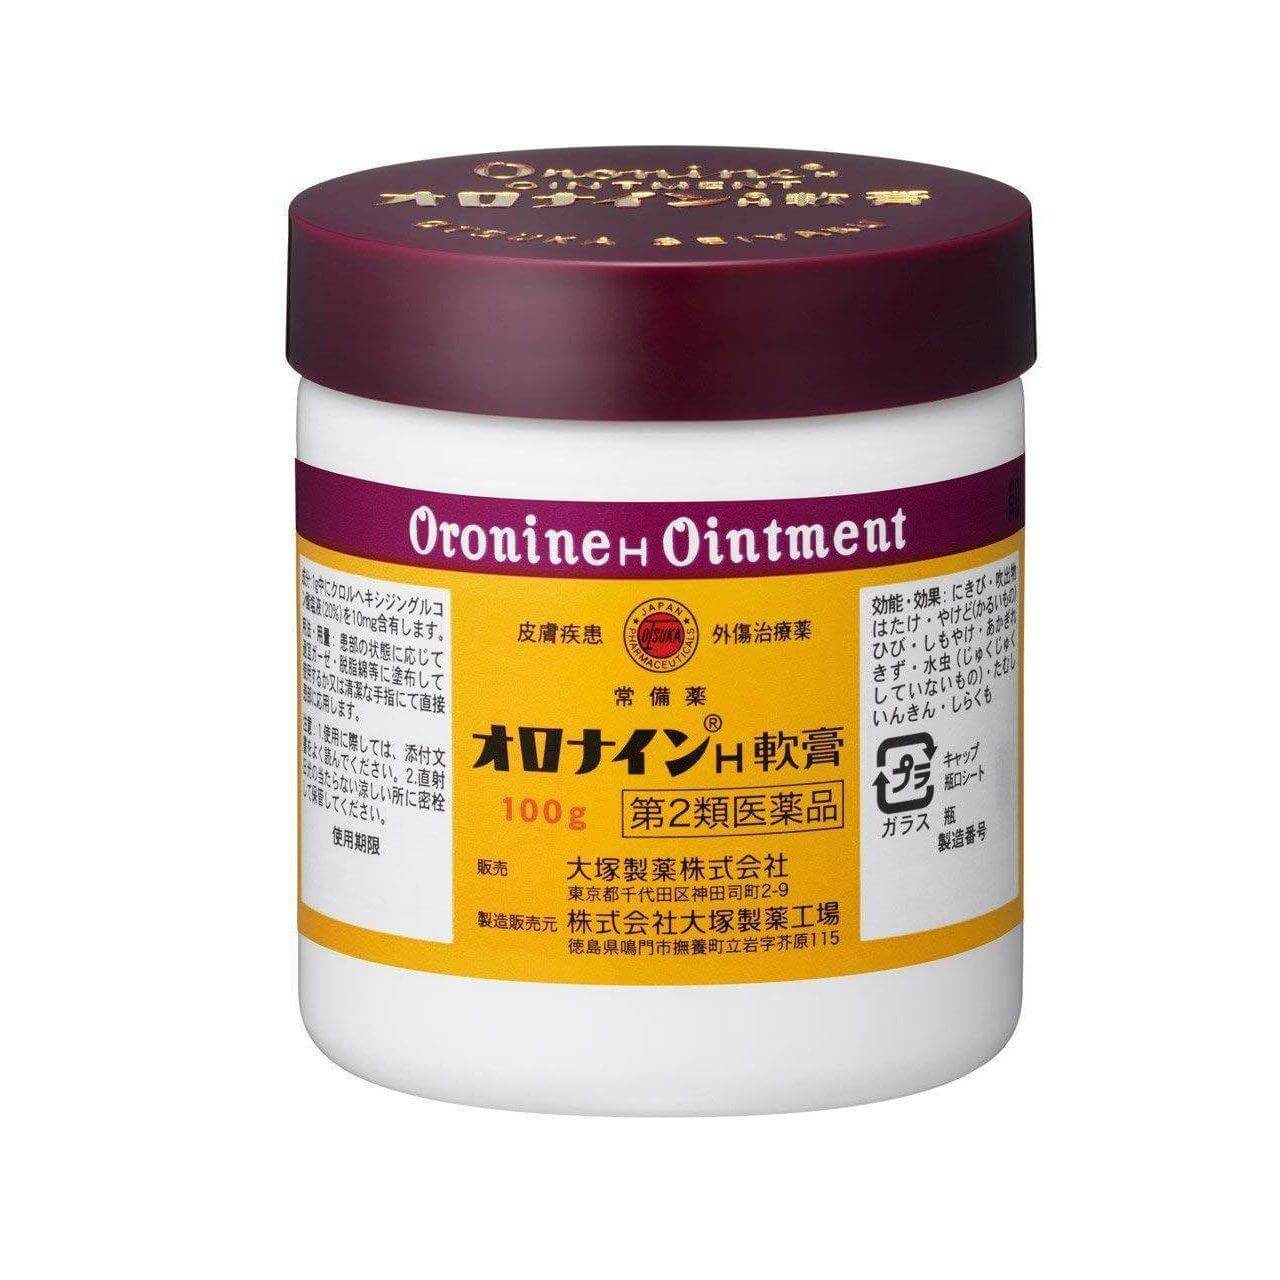 Otsuka Oronine H Ointment Medicated Cream 100g